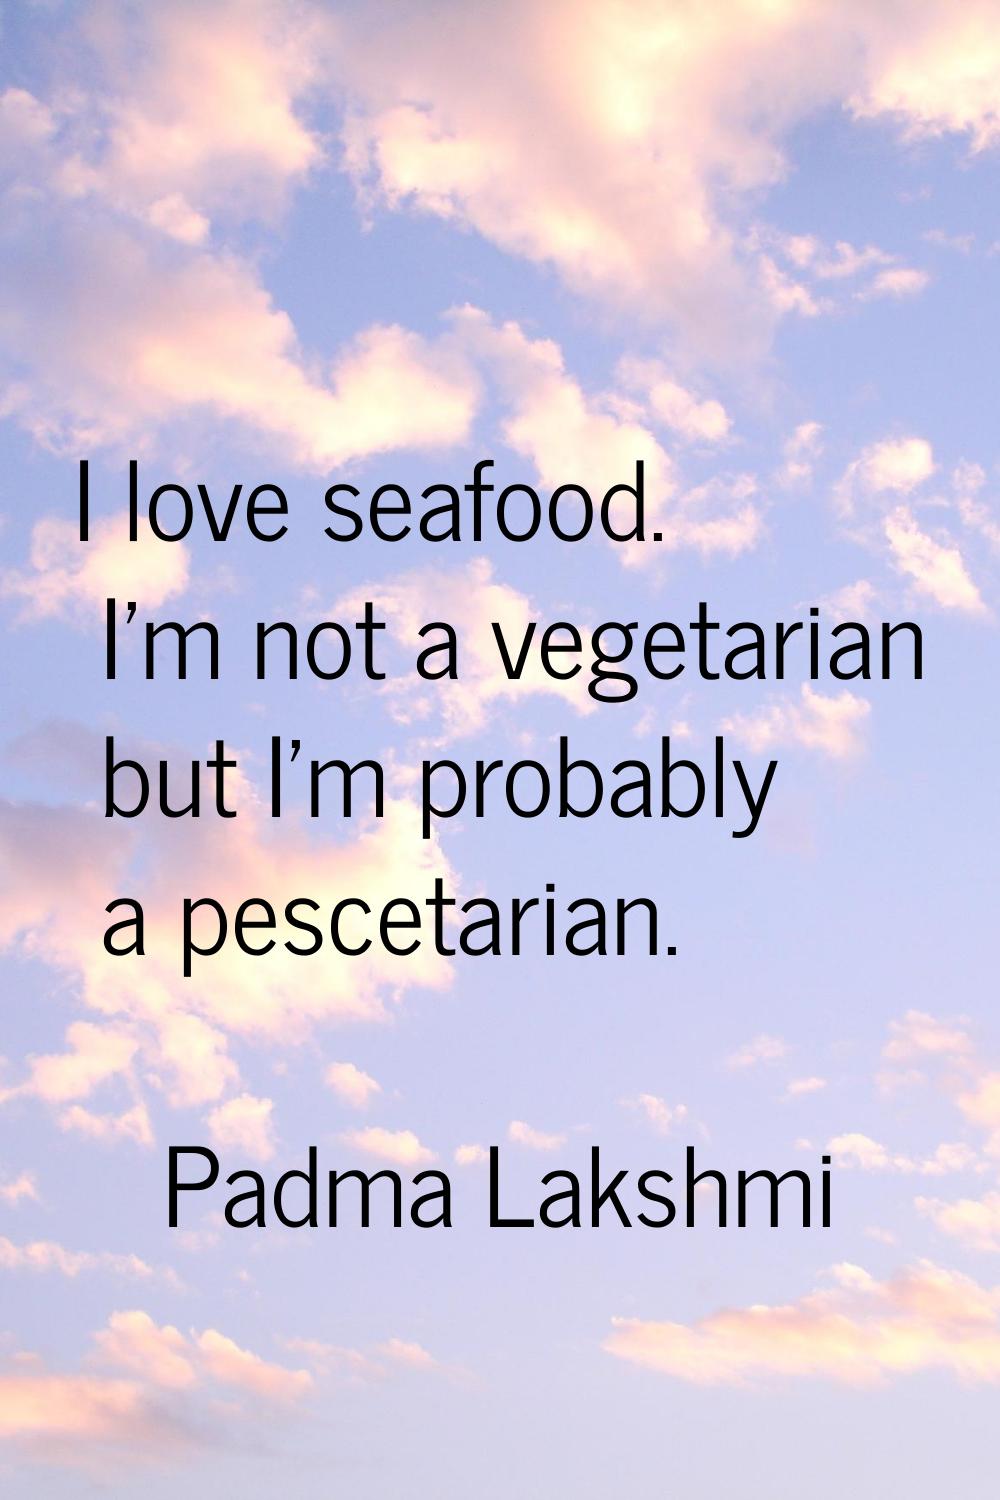 I love seafood. I'm not a vegetarian but I'm probably a pescetarian.